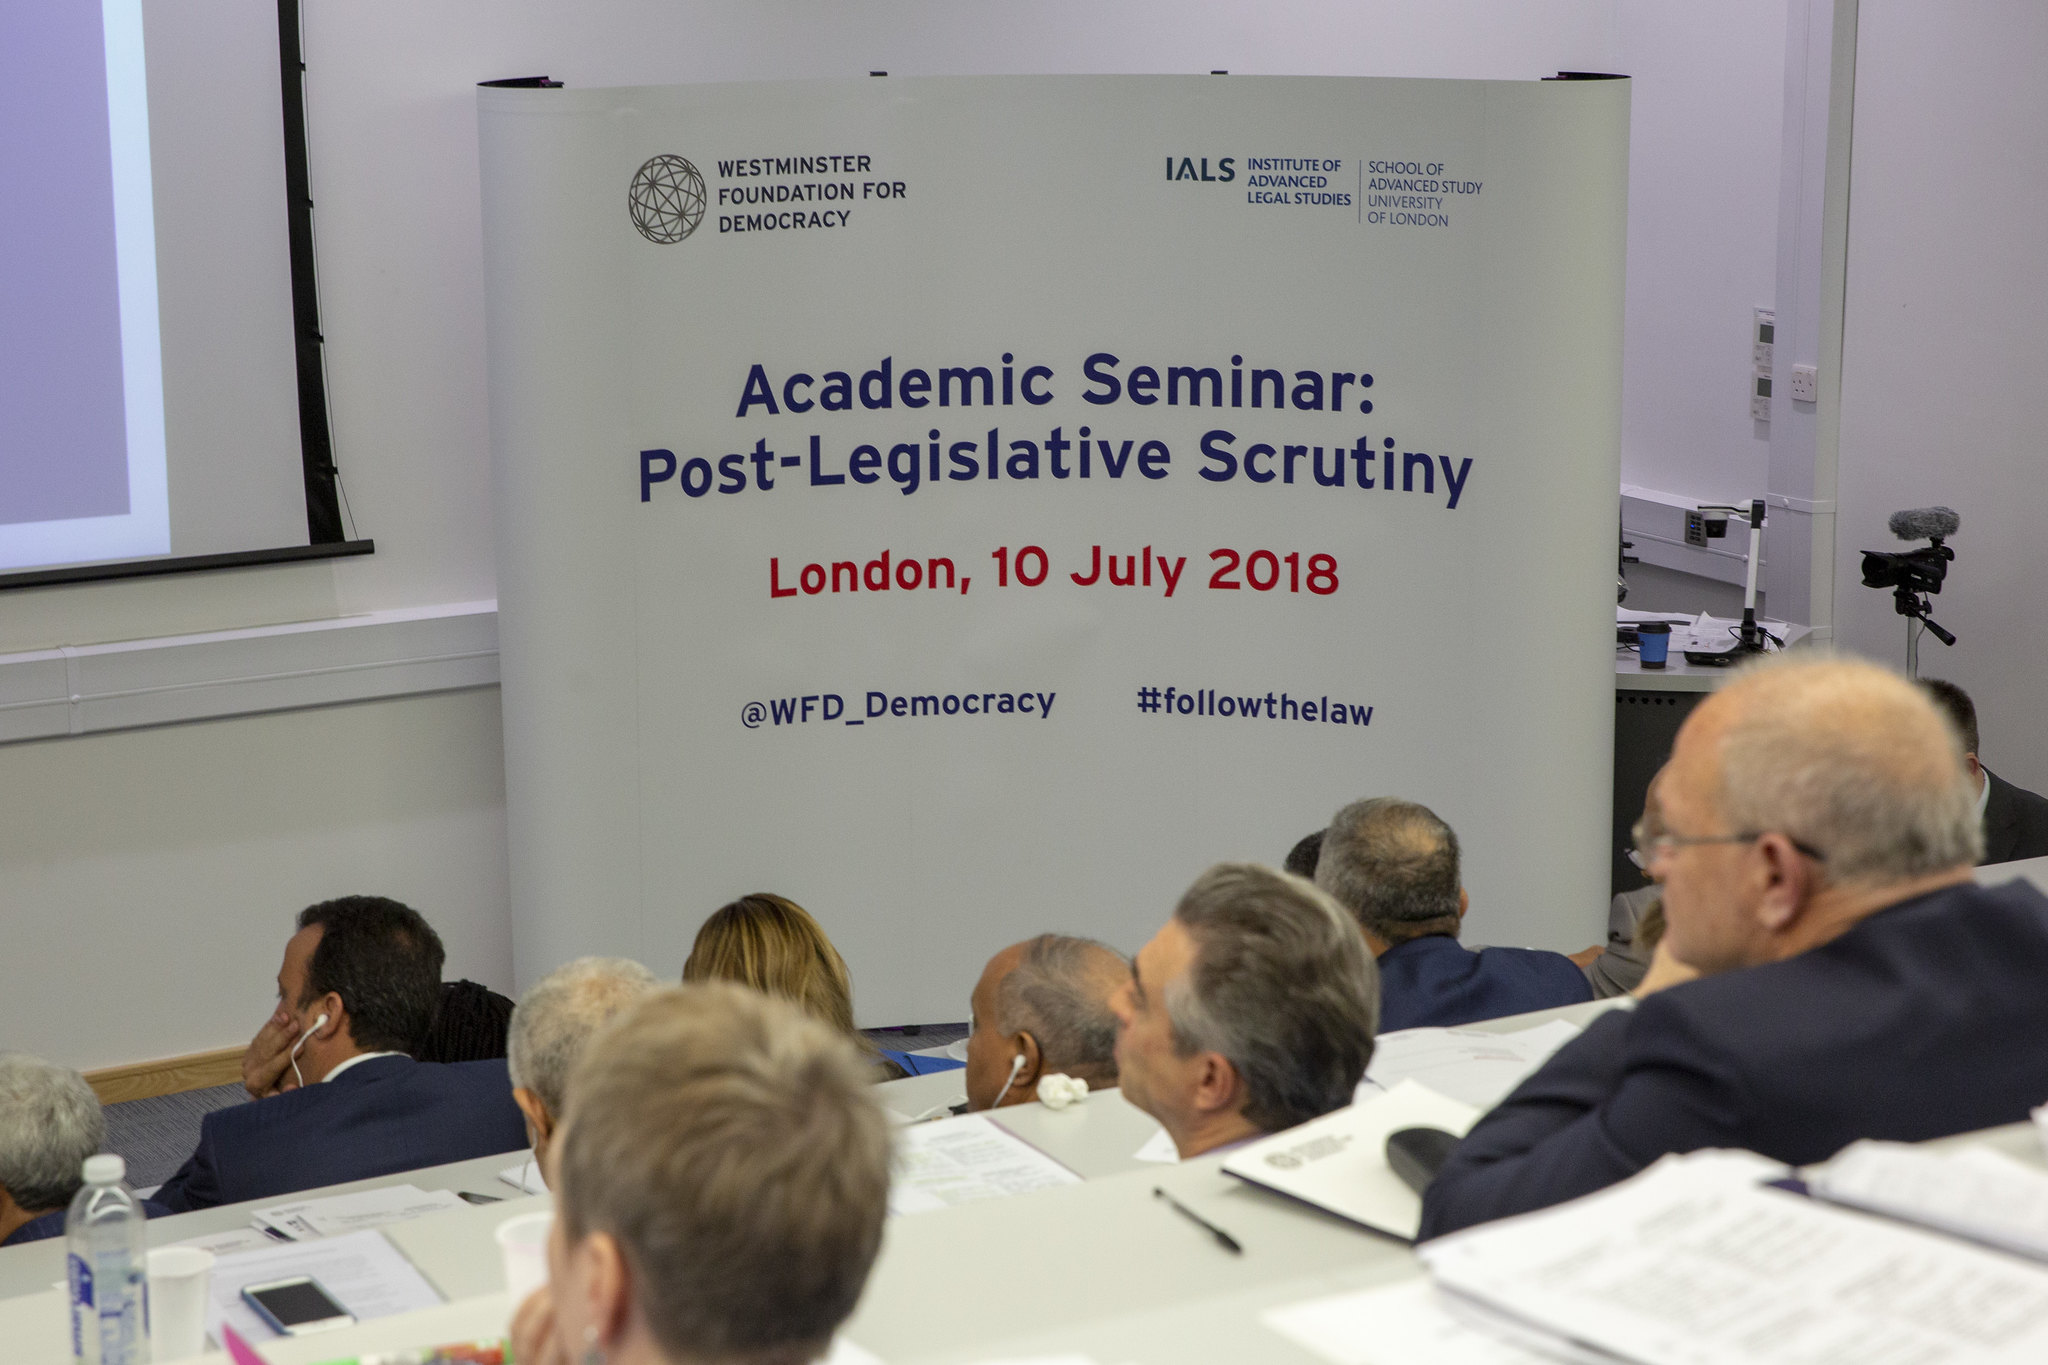 participants at the academic seminar on post-legislative scrutiny